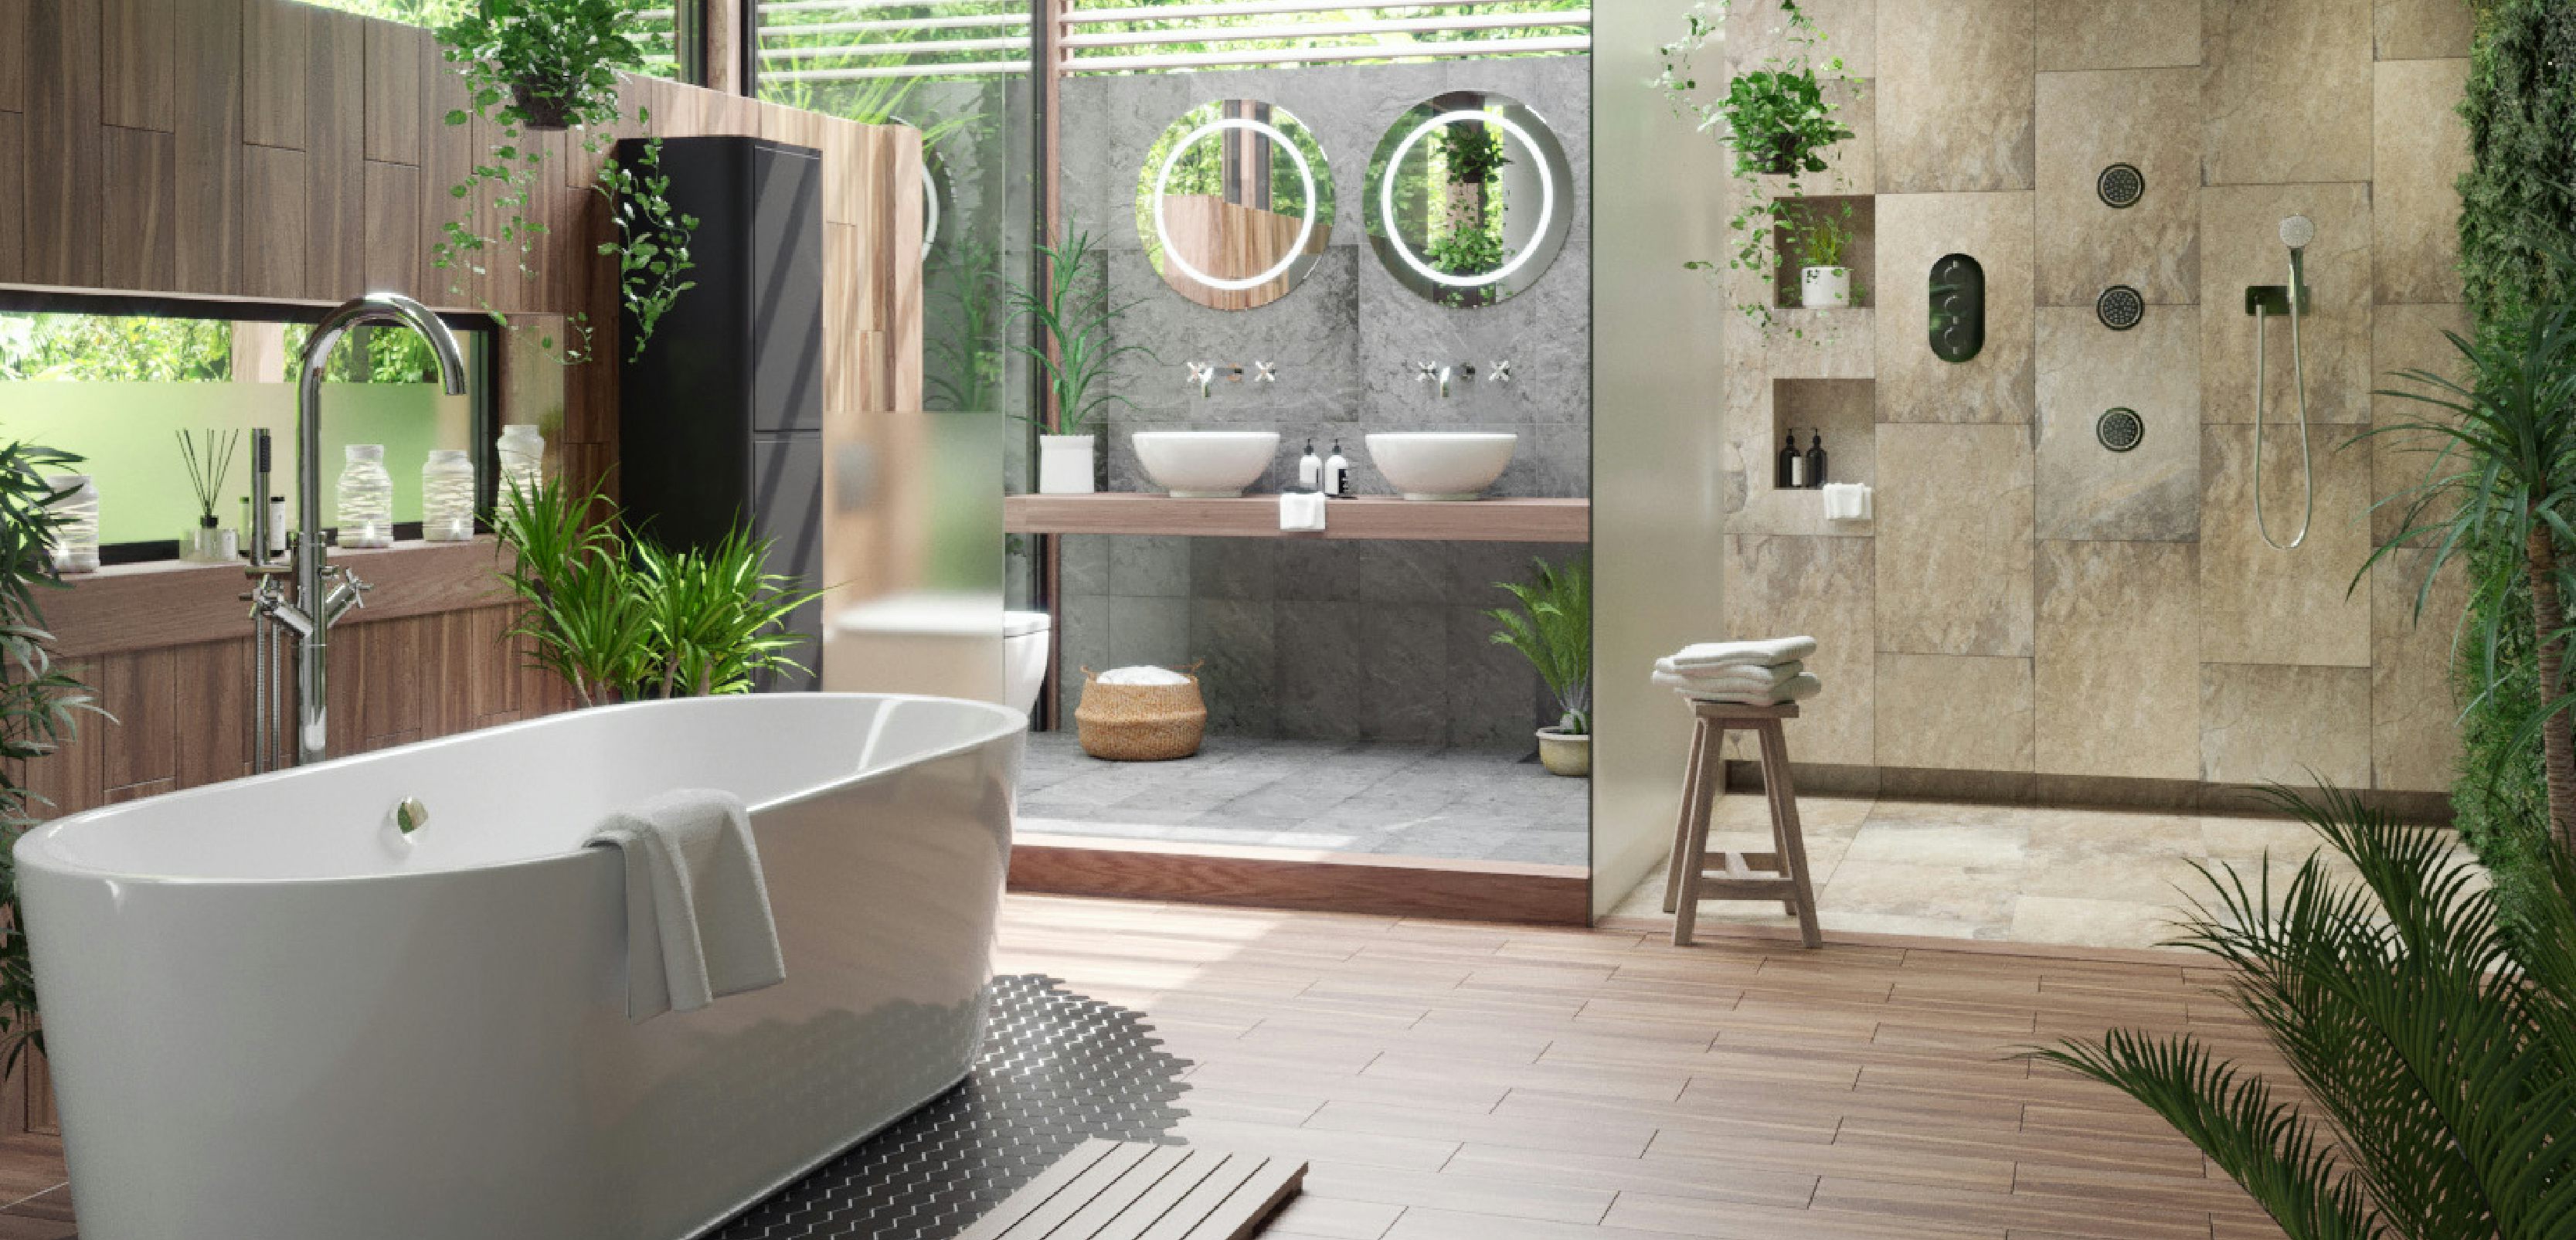  Bathroom  ideas  Tropical bathrooms  VictoriaPlum com